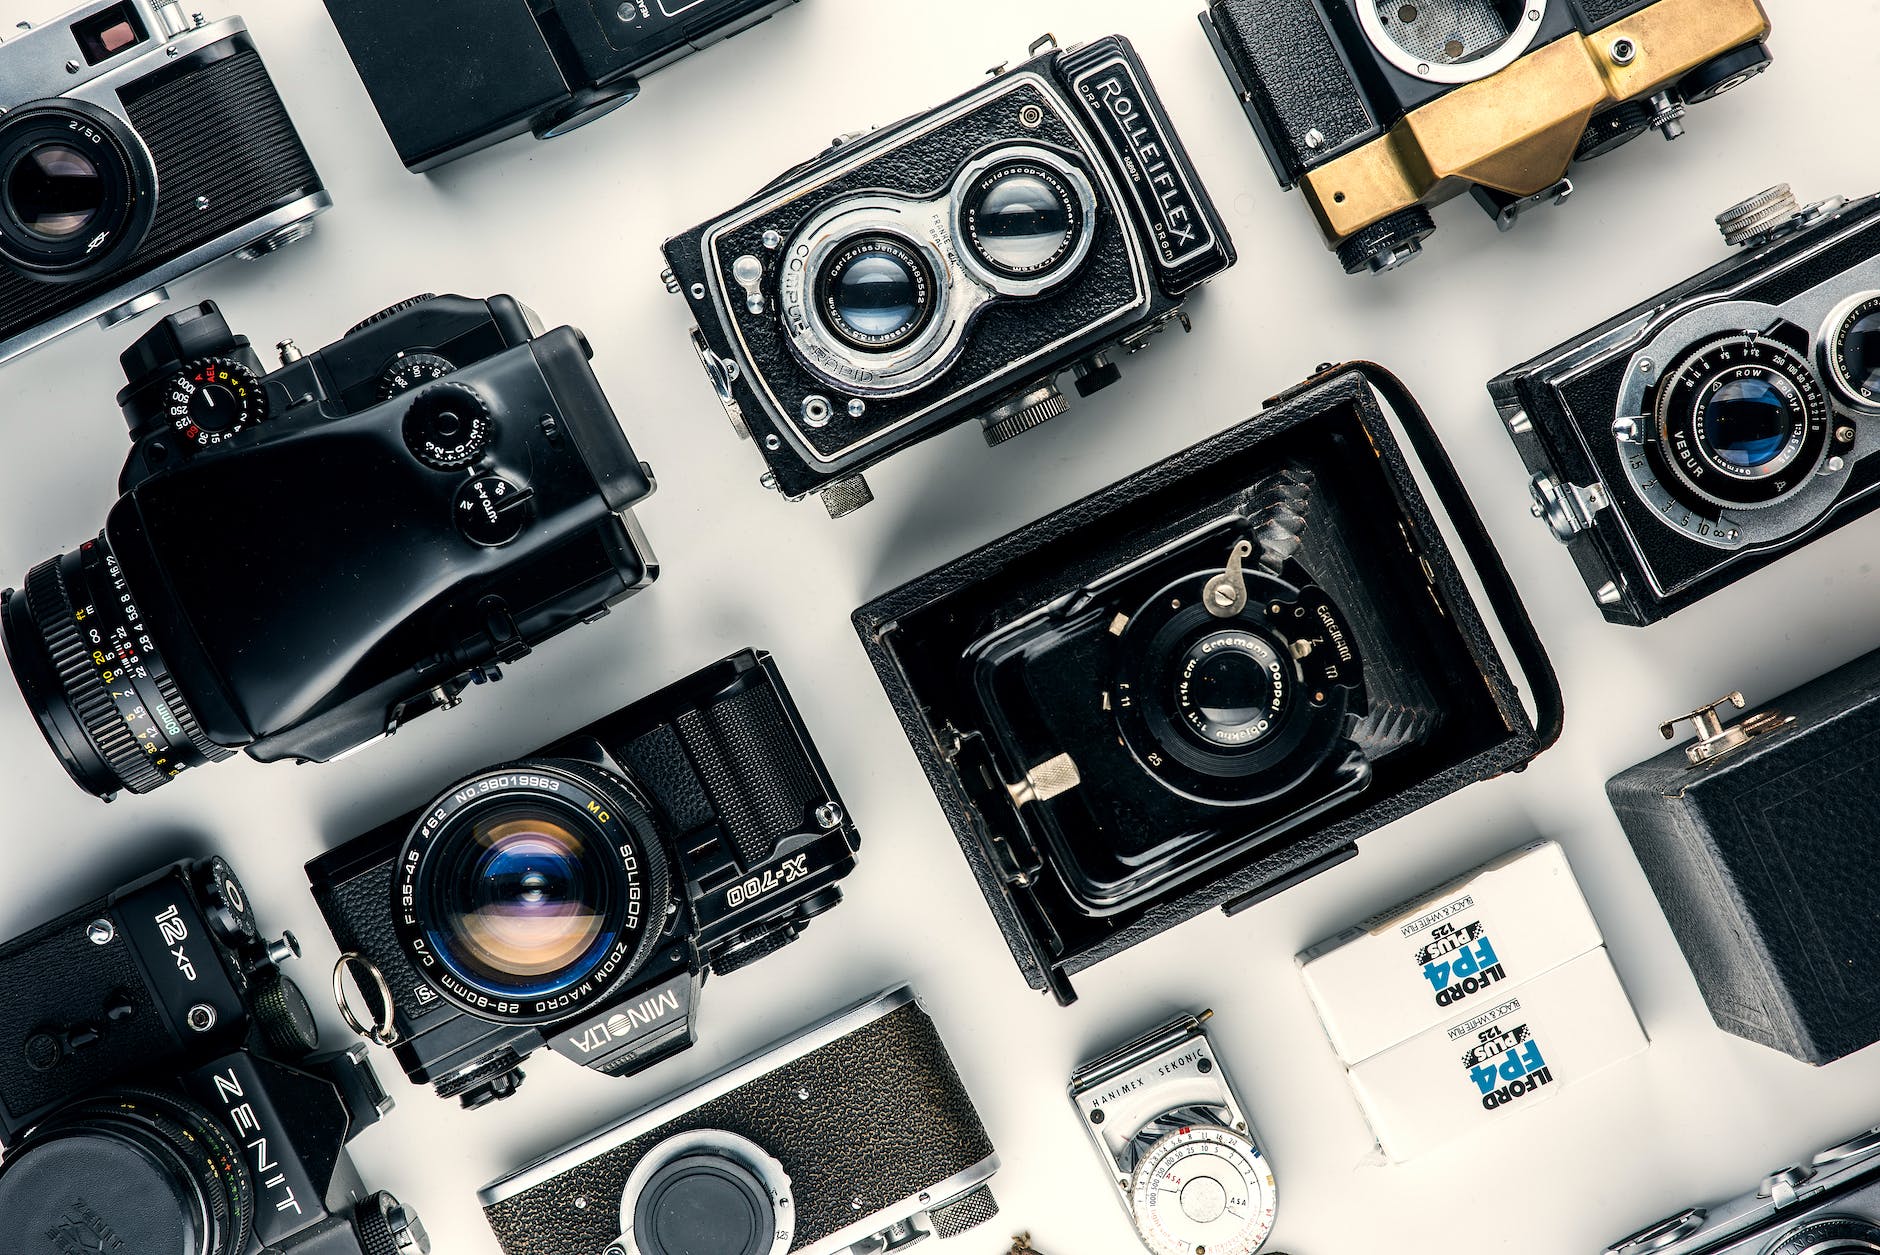 assorted black and gray cameras